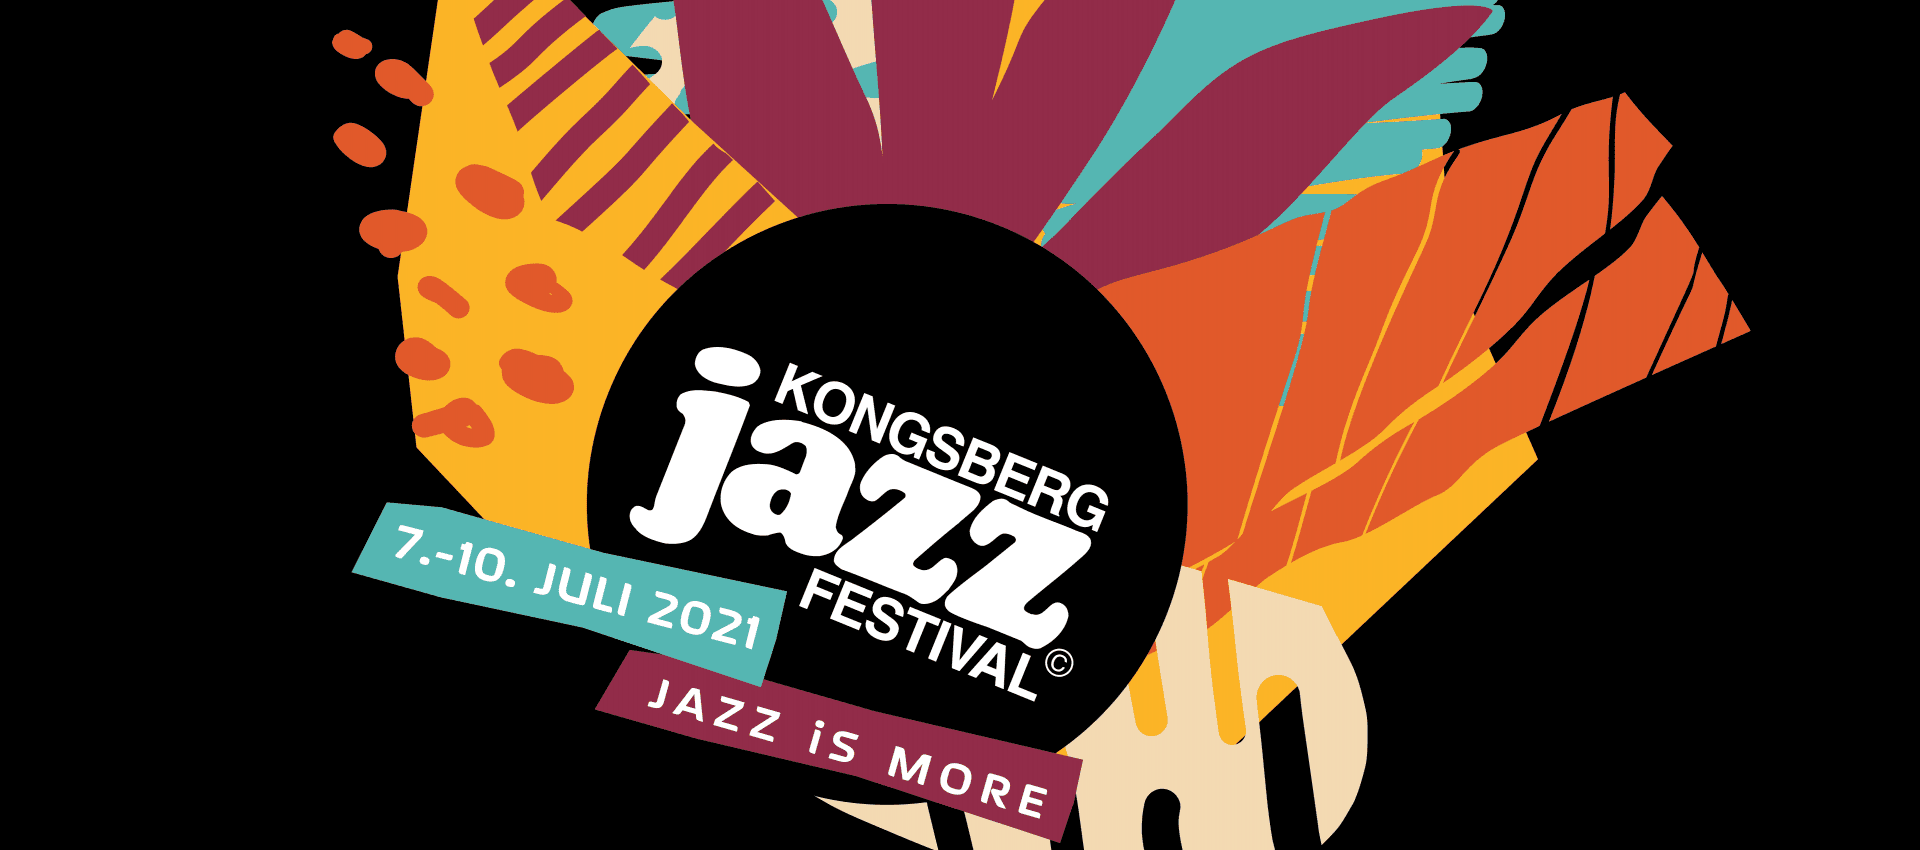 Kongsberg Jazzfestival logo